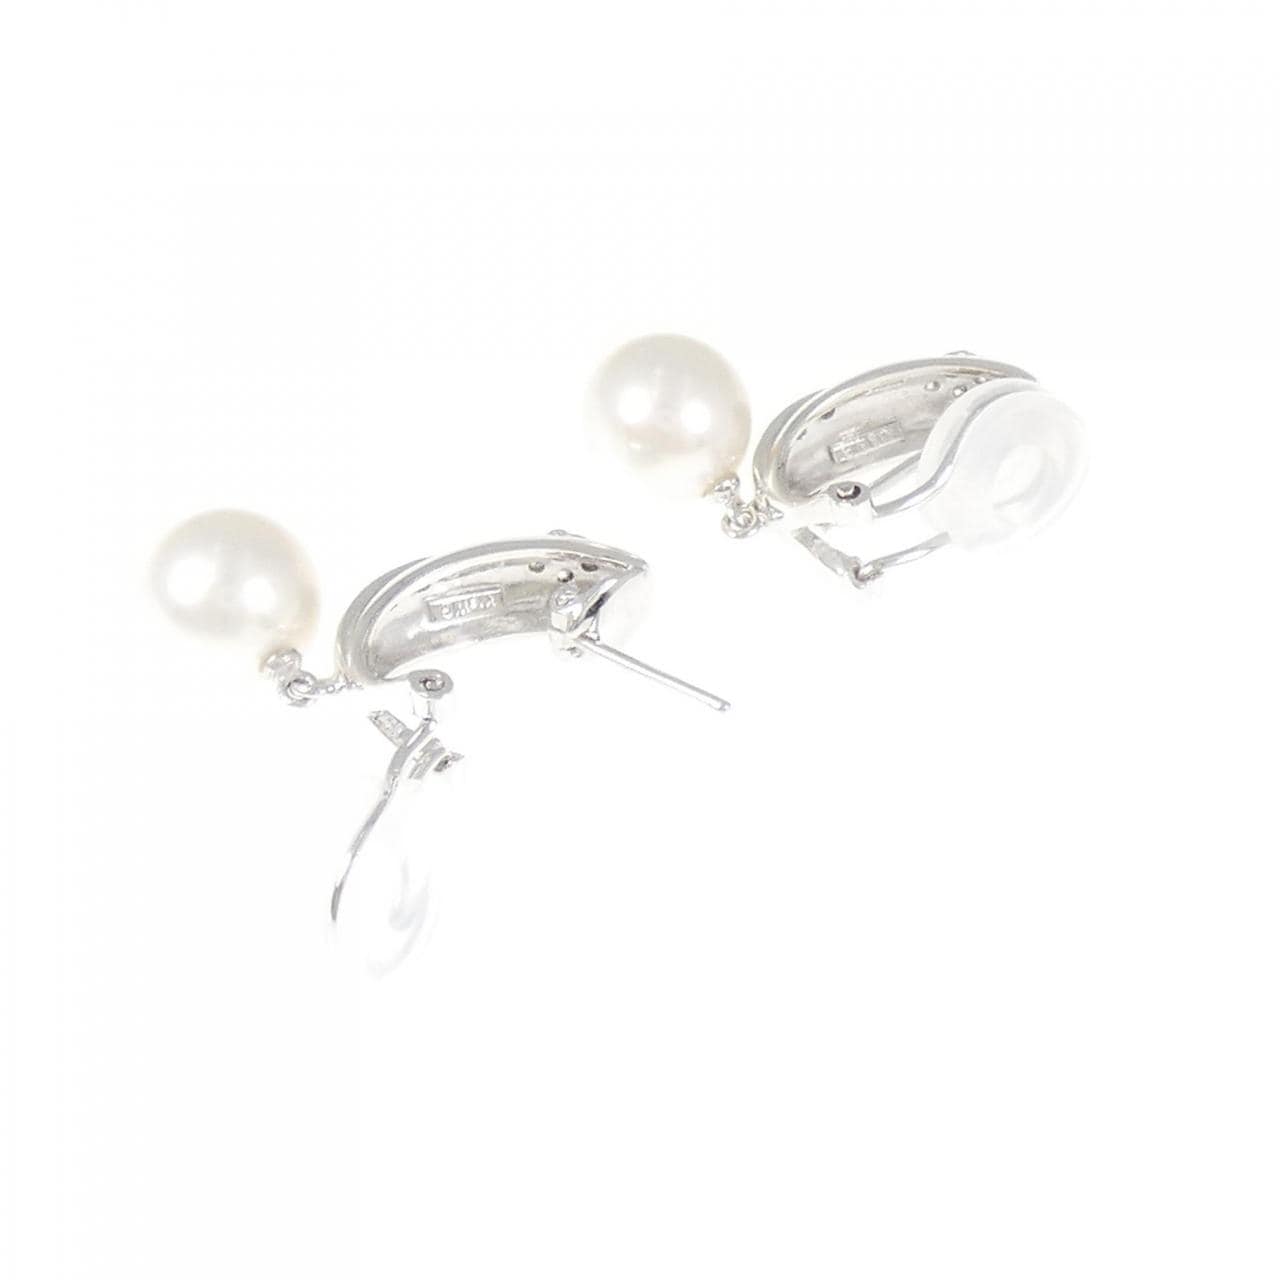 K18WG Akoya pearl earrings/earrings 8.0mm